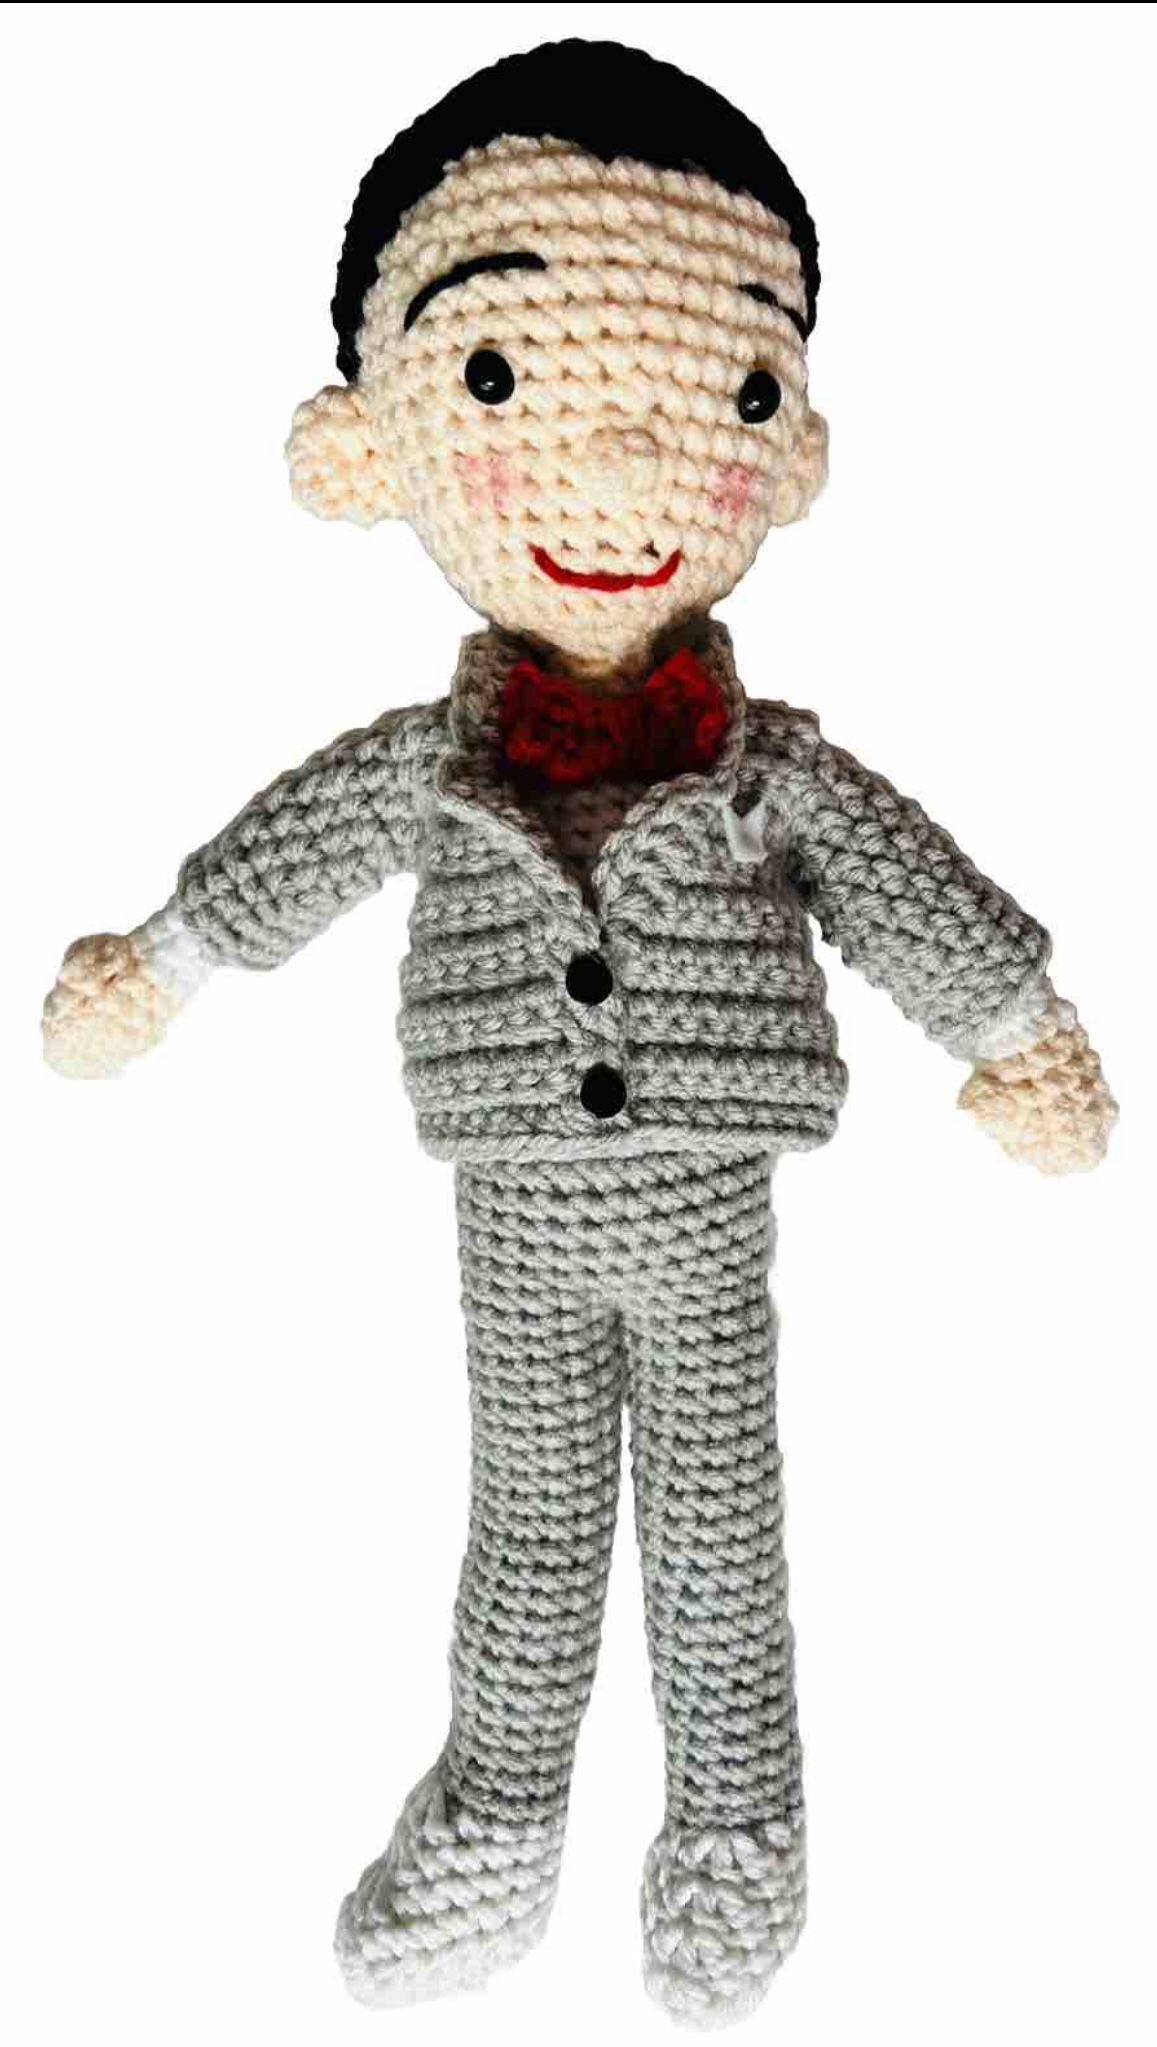 PeeWee Herman figure Crochet Doll PLUSH STuffed Amigurumi TOY handmade unique